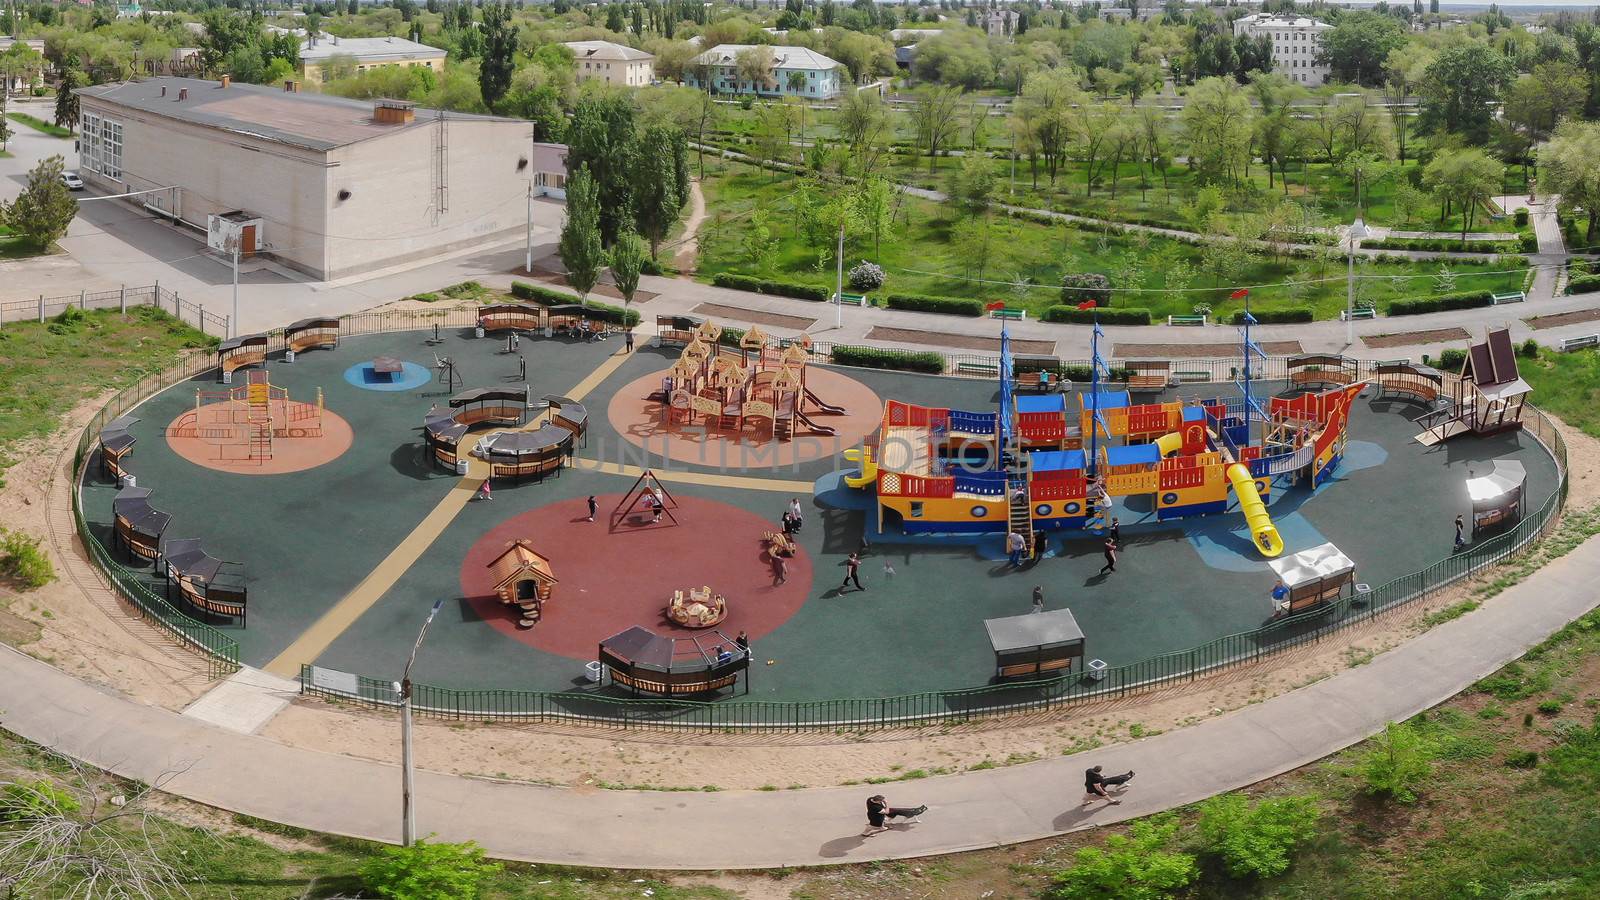 Children playground on yard activities in public park. Aerial view by marynkin